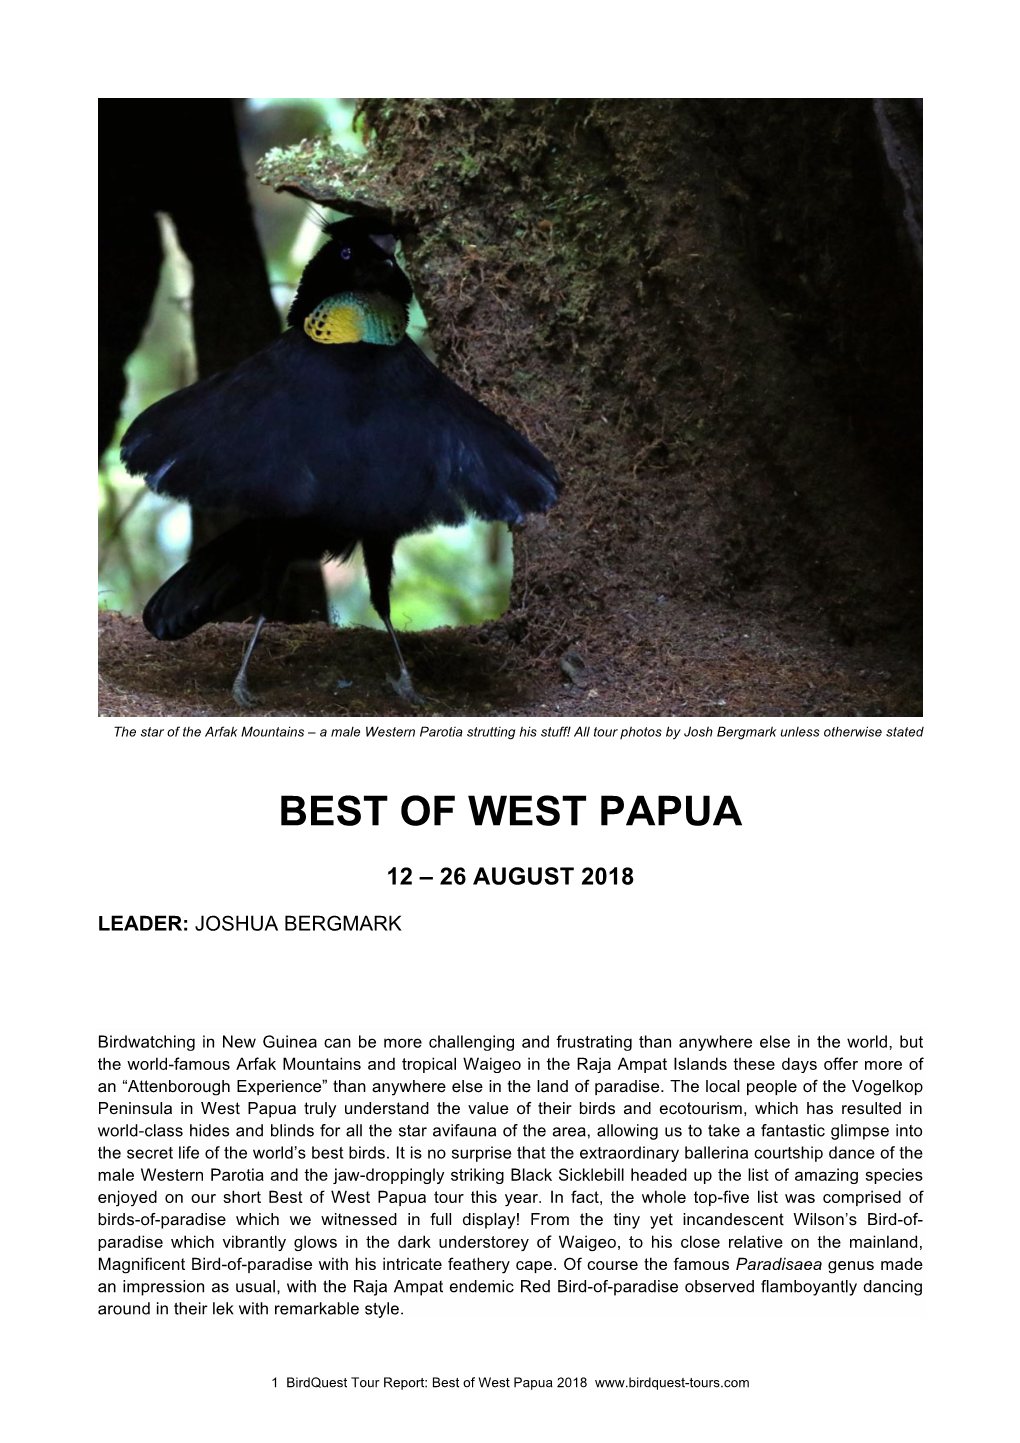 Best of West Papua